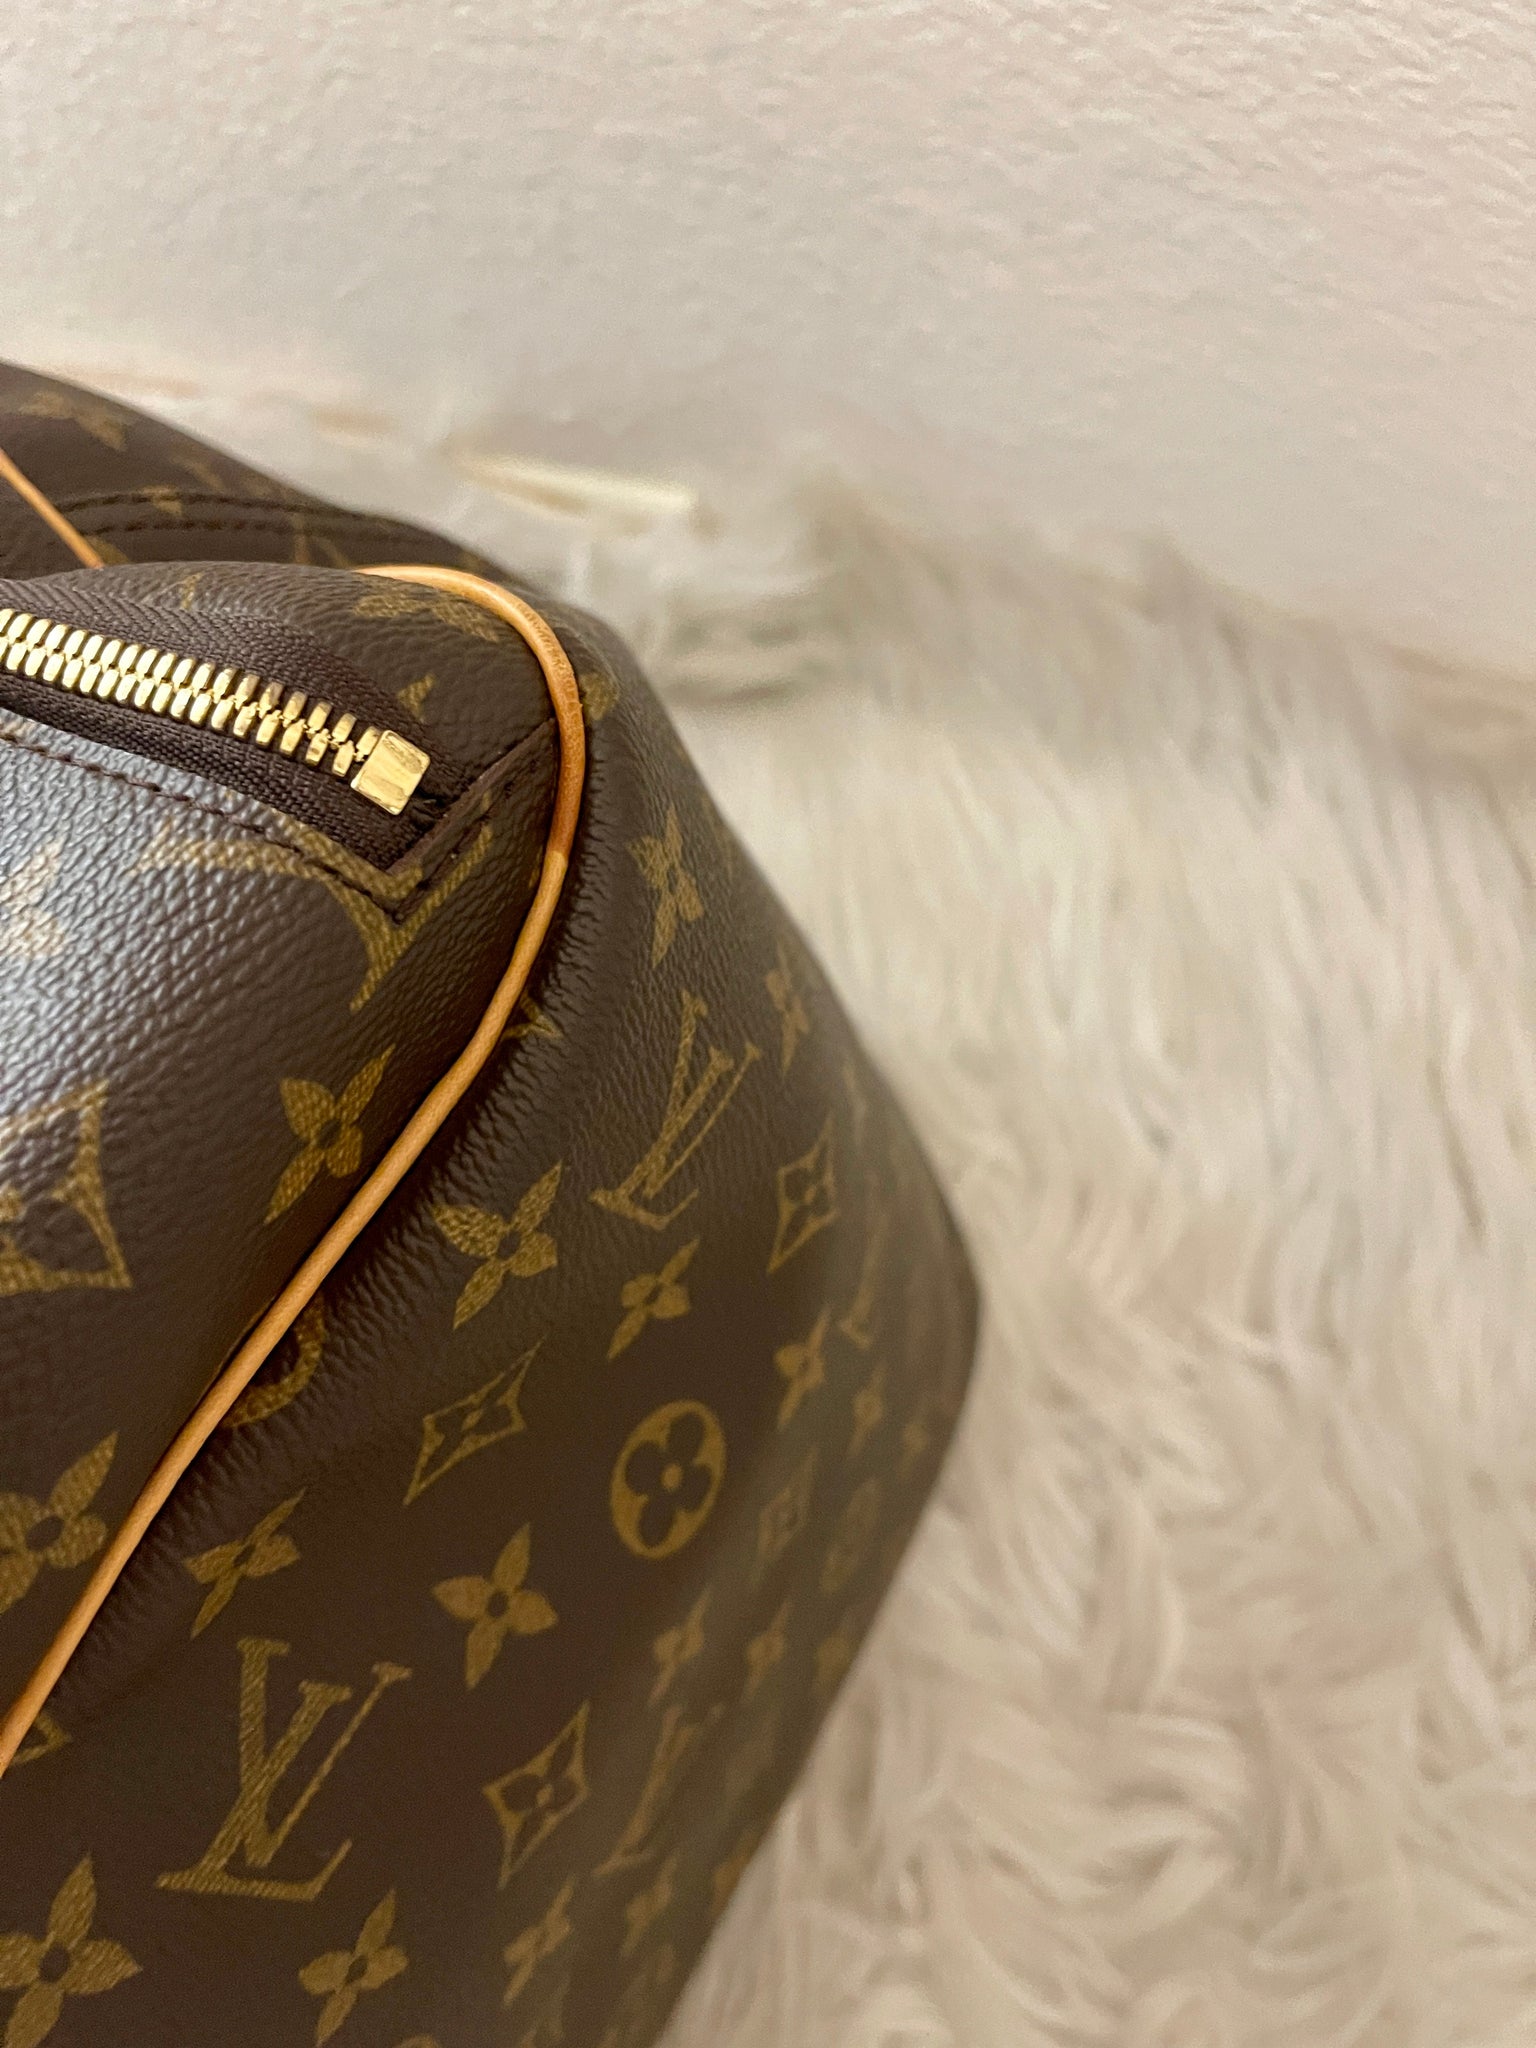 Louis Vuitton Evasion Travel Bag Monogram Canvas mm Brown